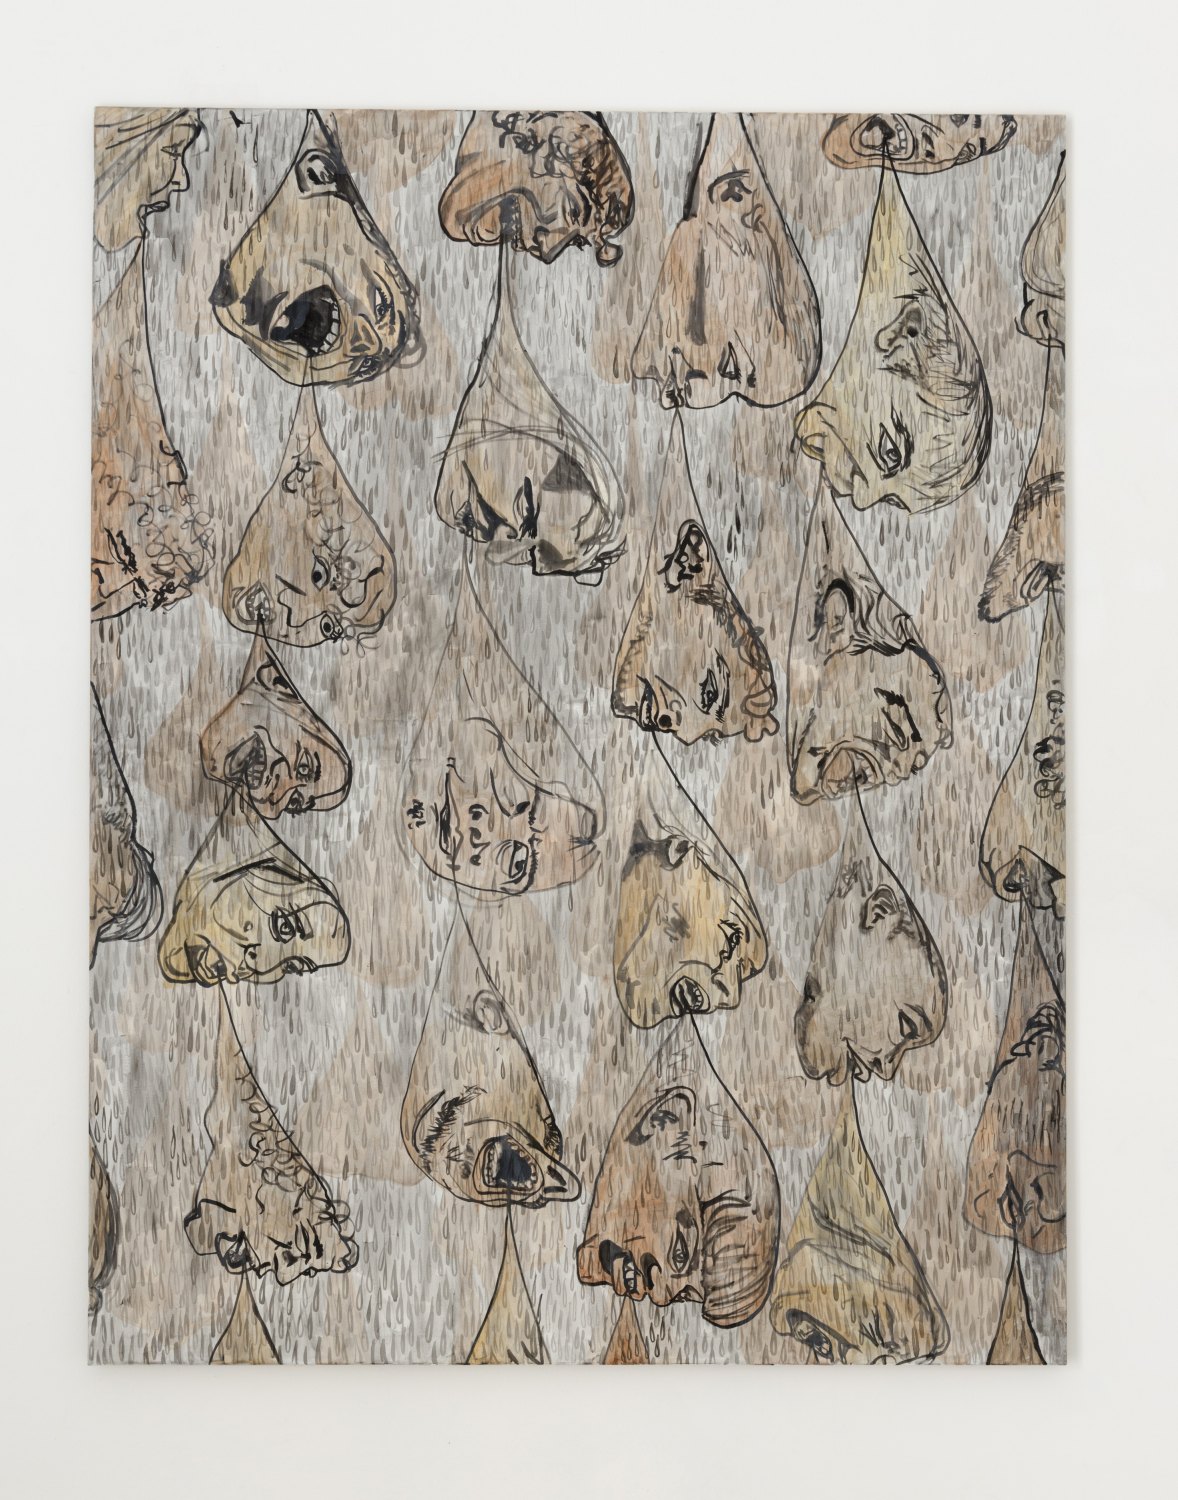 Jana Euler dirty gossip rain, 2013 Oil on canvas, 180 x 140 cm   